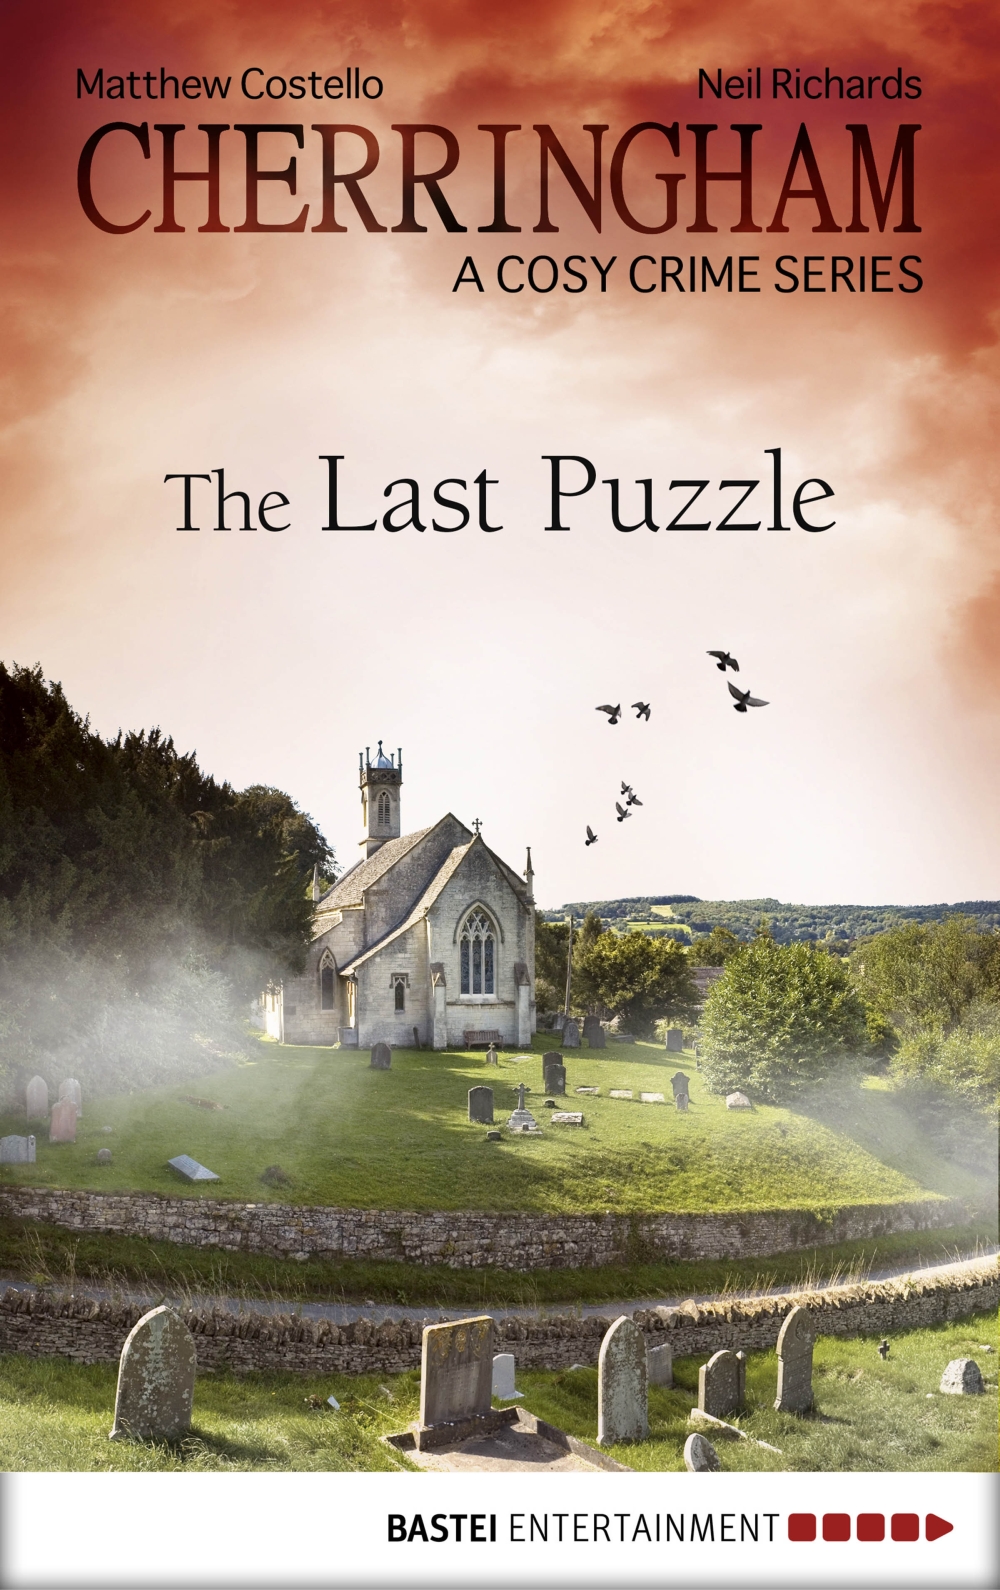 Cherringham--The Last Puzzle (2015) by Neil Richards